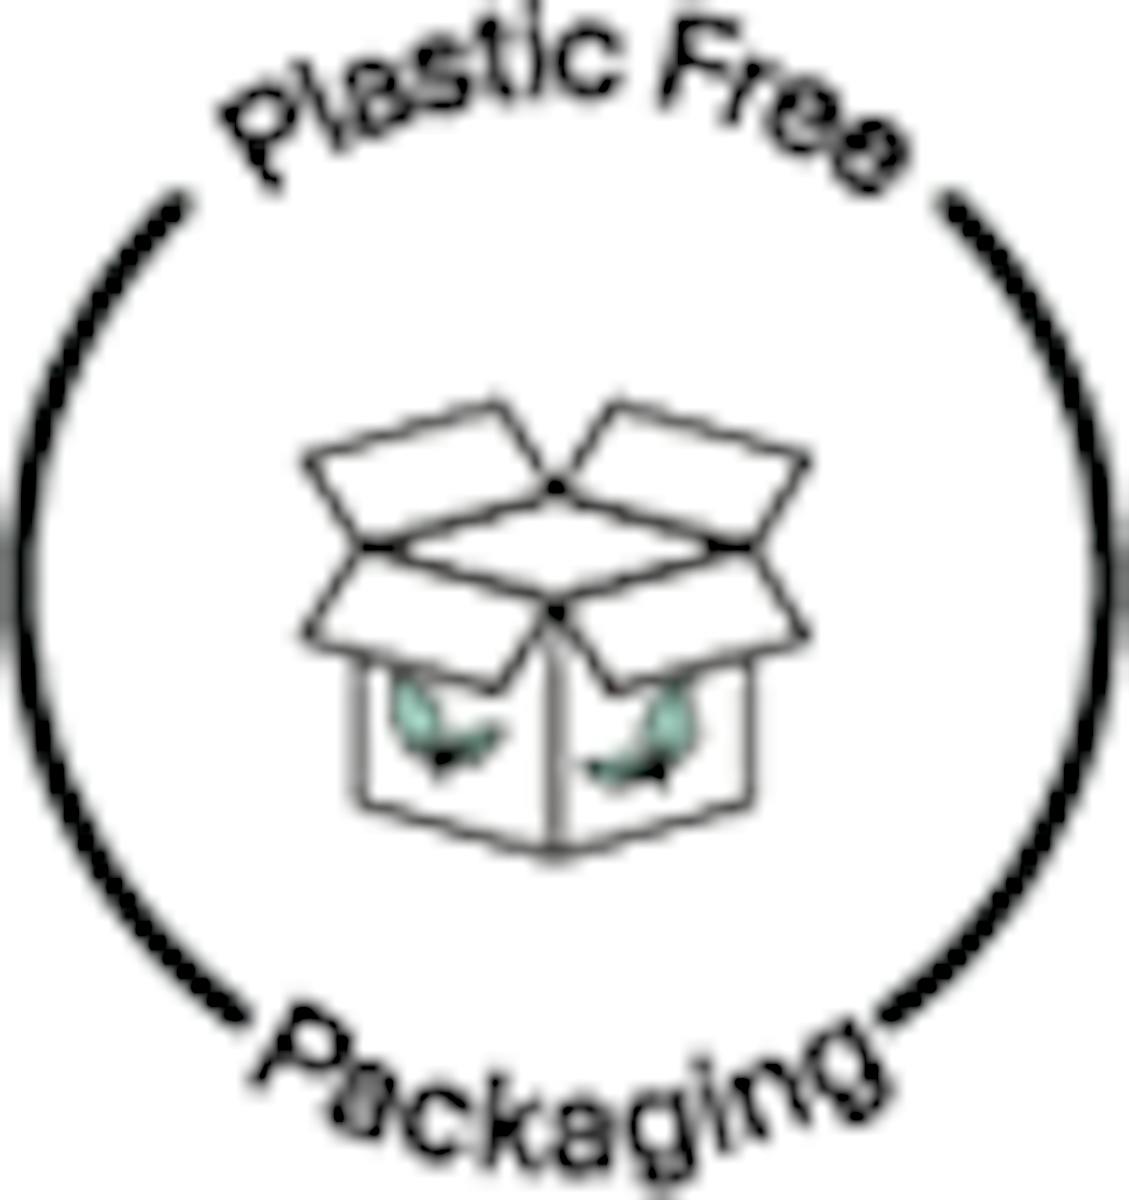 Plastic Free Packaging certification